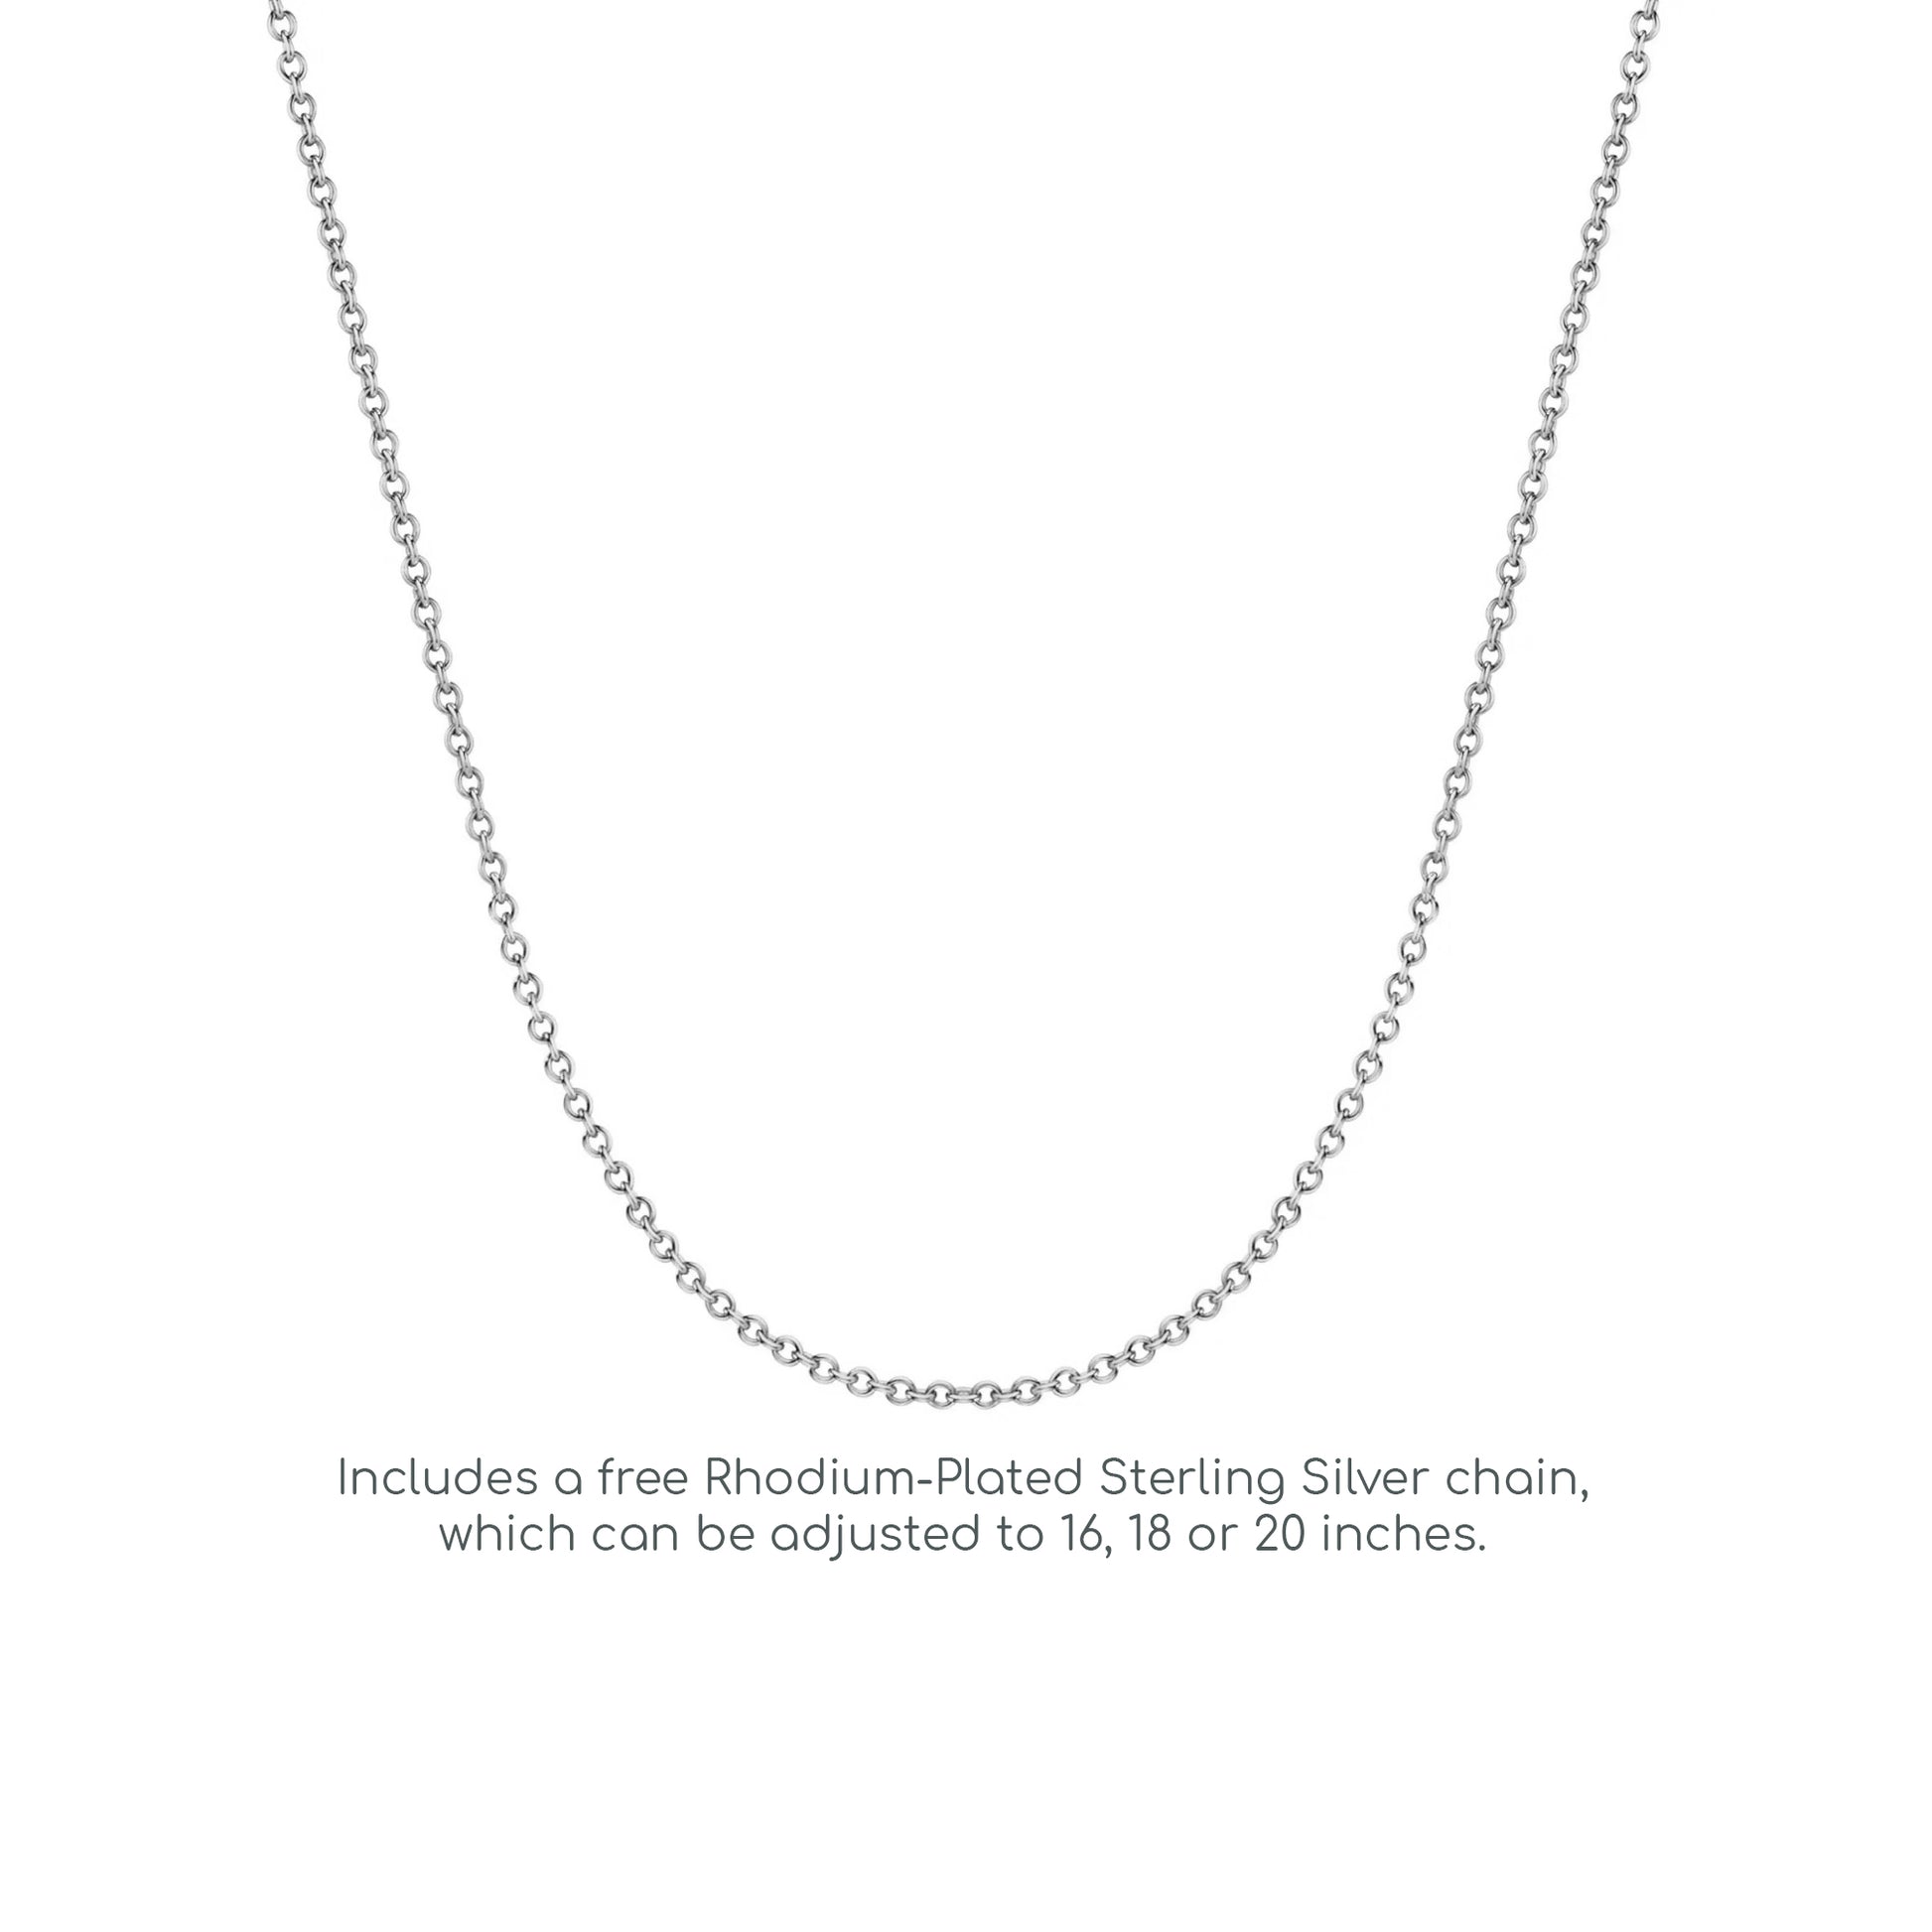 Silver  CZ Interlocked Love Hearts Pendant Necklace 17 inch - SZP009